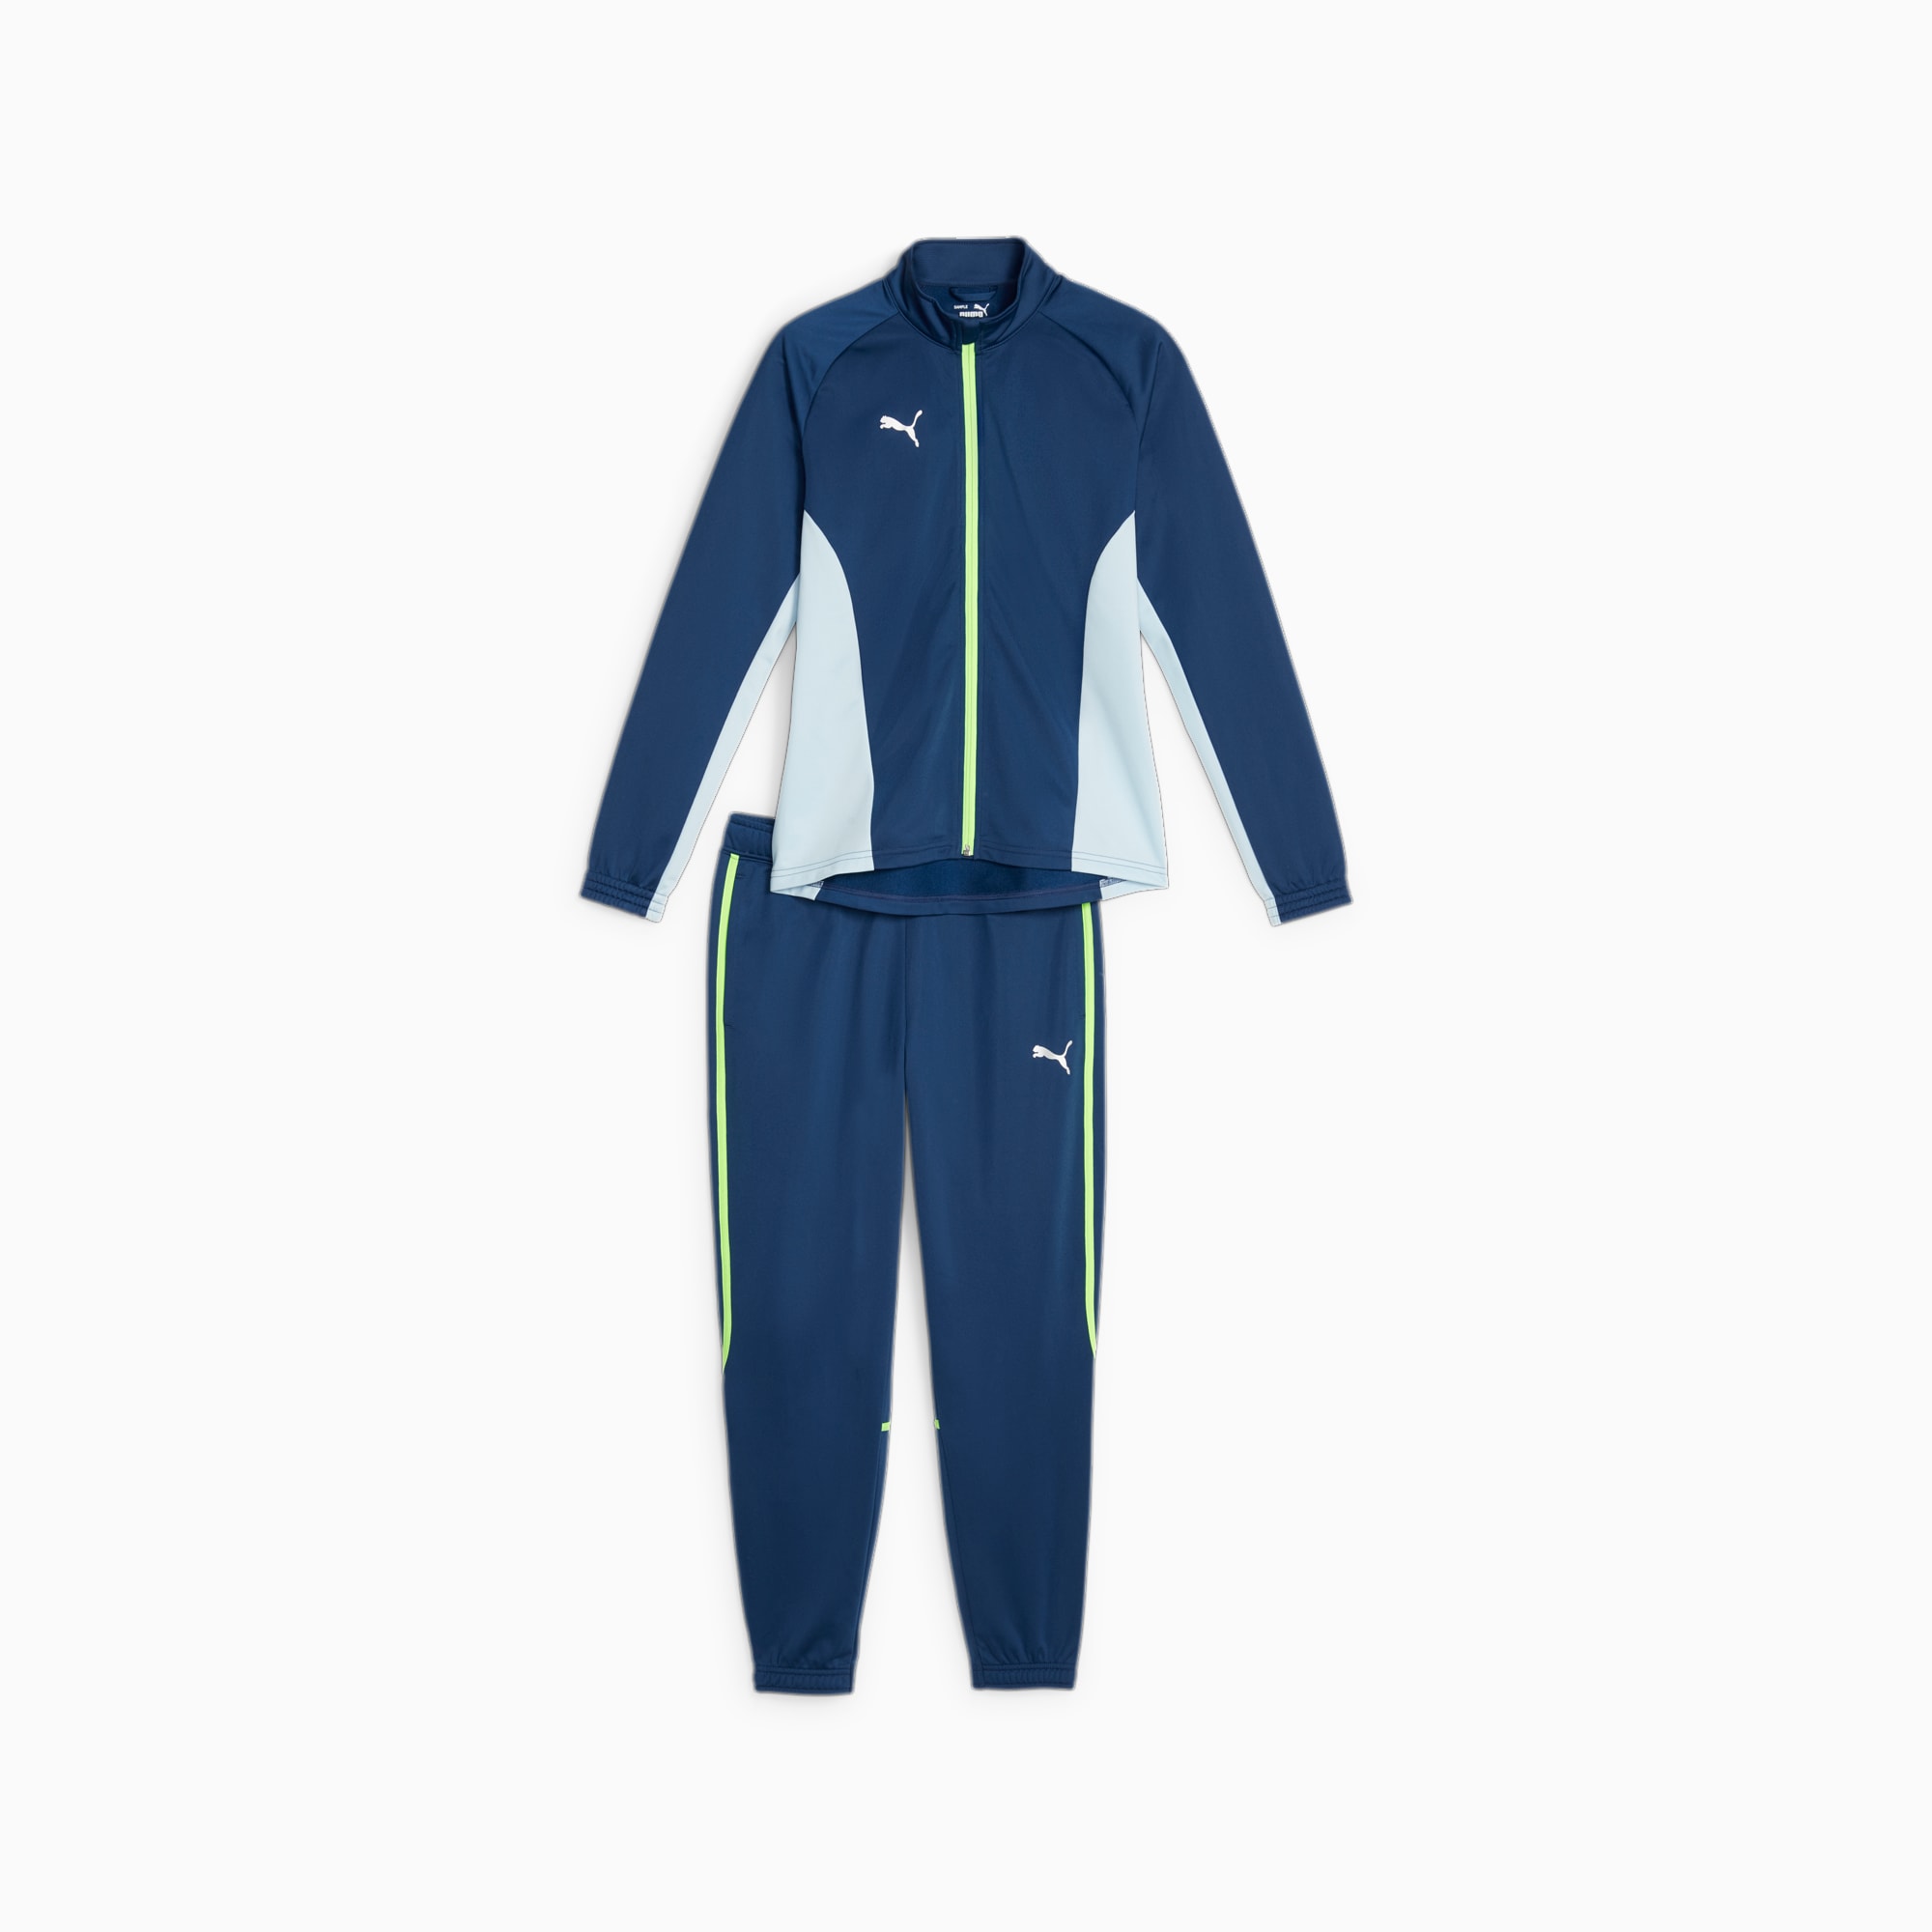 PUMA IndividualBLAZE Fußball Trainingsanzug, Blau/Silber, Größe: M, Kleidung